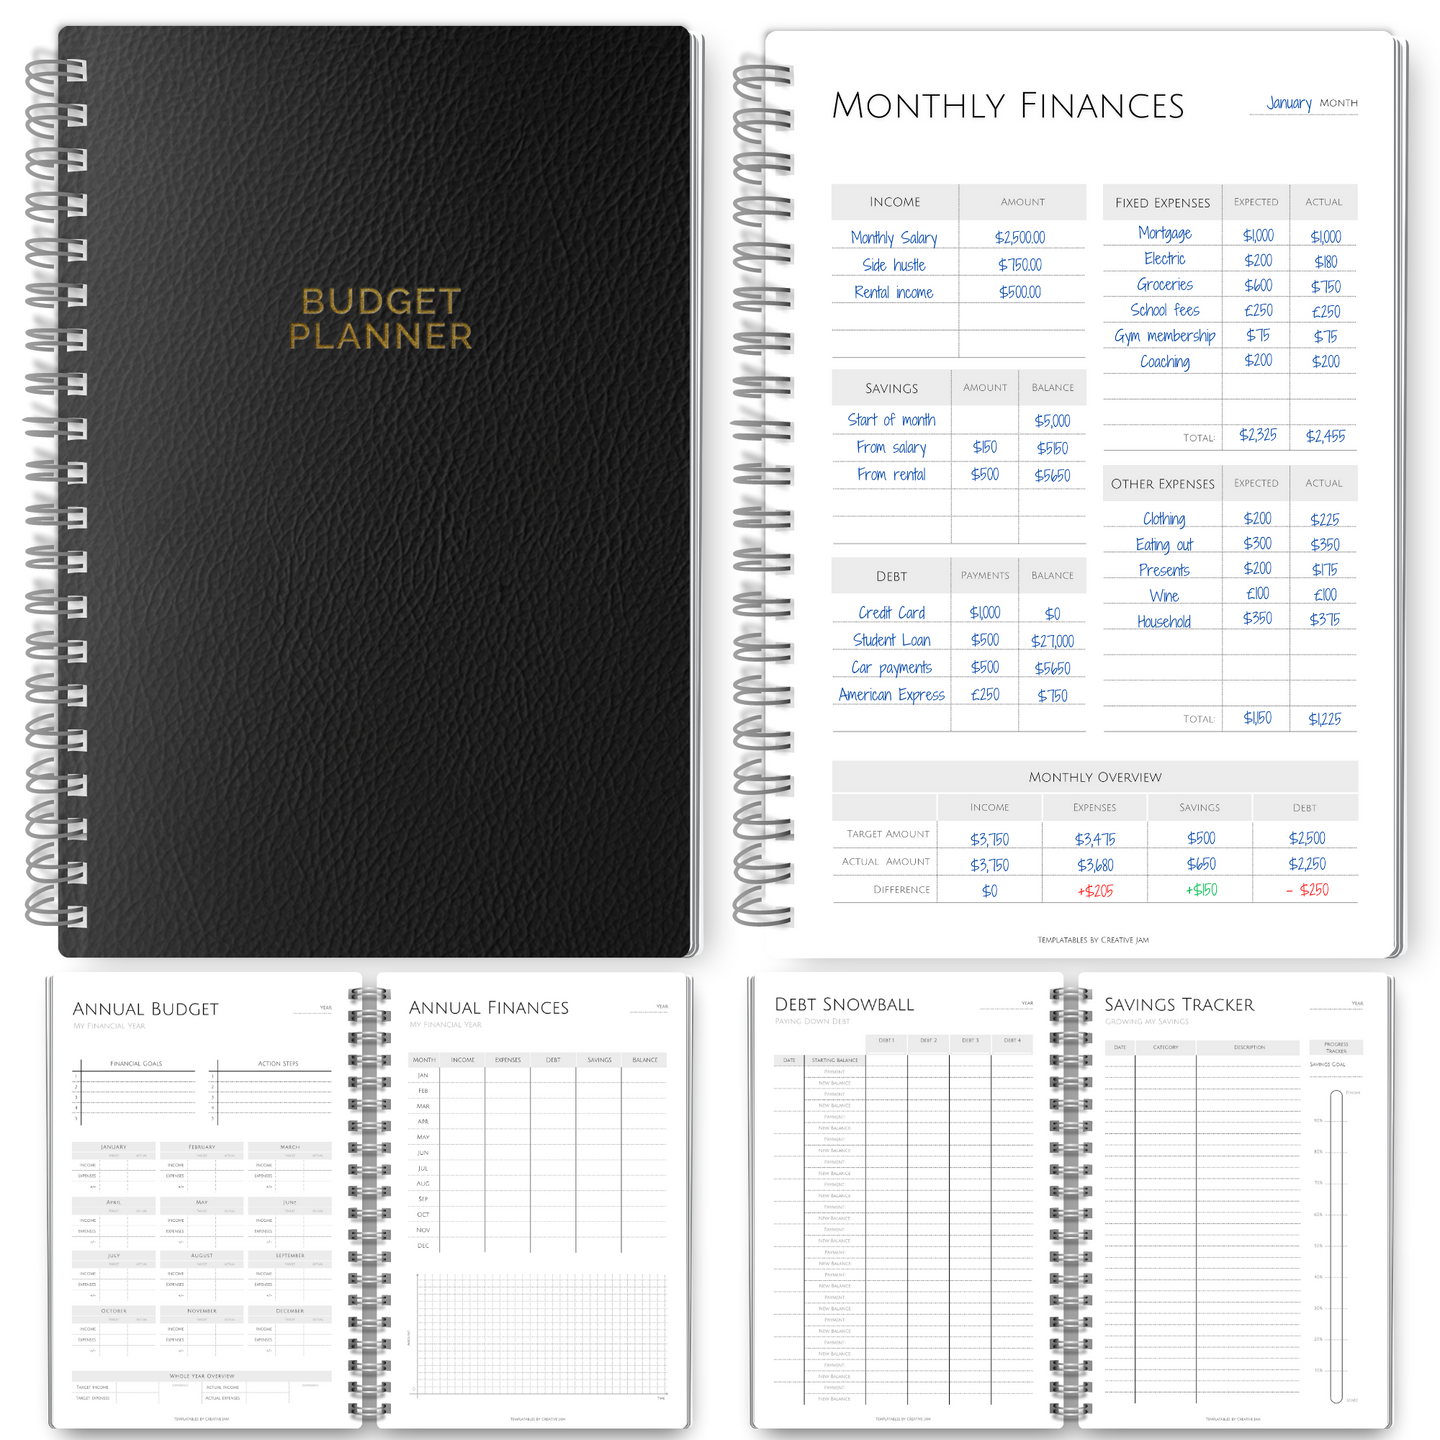 Budget Planner & Monthly Bill Organizer | Finance Budget Planner, Financial Savings, Debt, Income, Expenses, Spending & Bill Trackers | A5 Mono